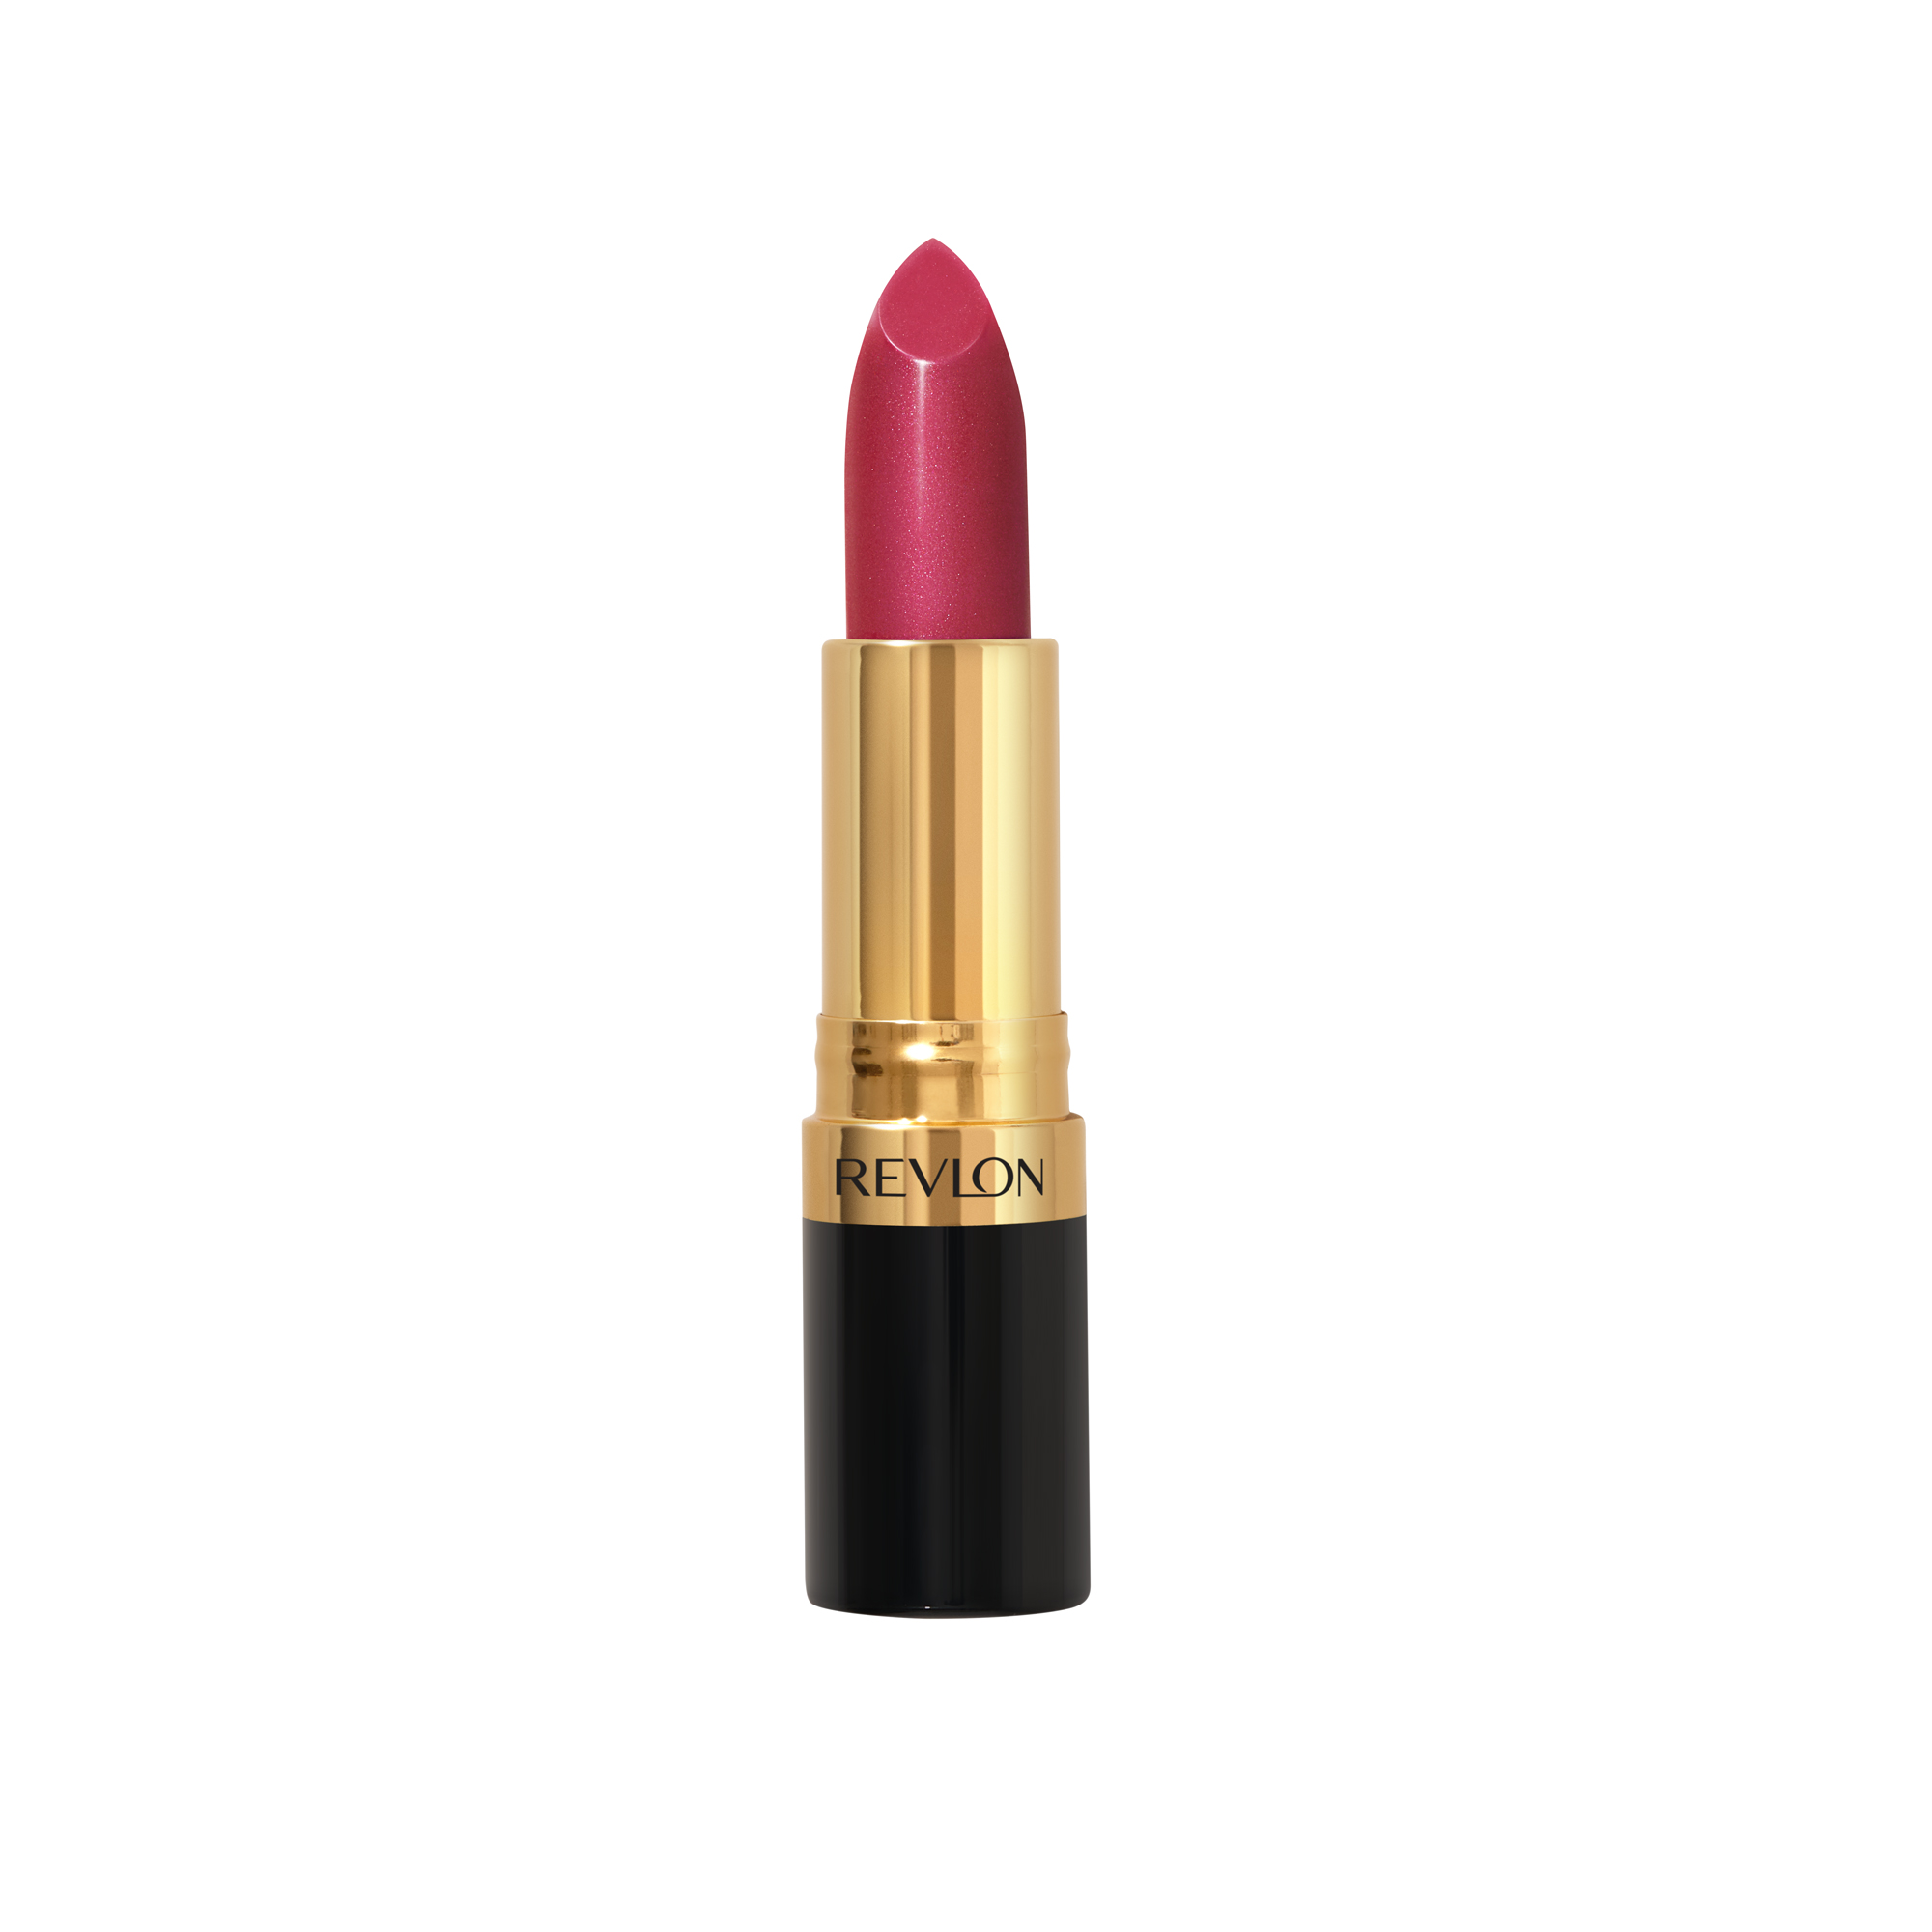 Revlon Super Lustrous Lipstick, Rich Girl Red - image 1 of 7